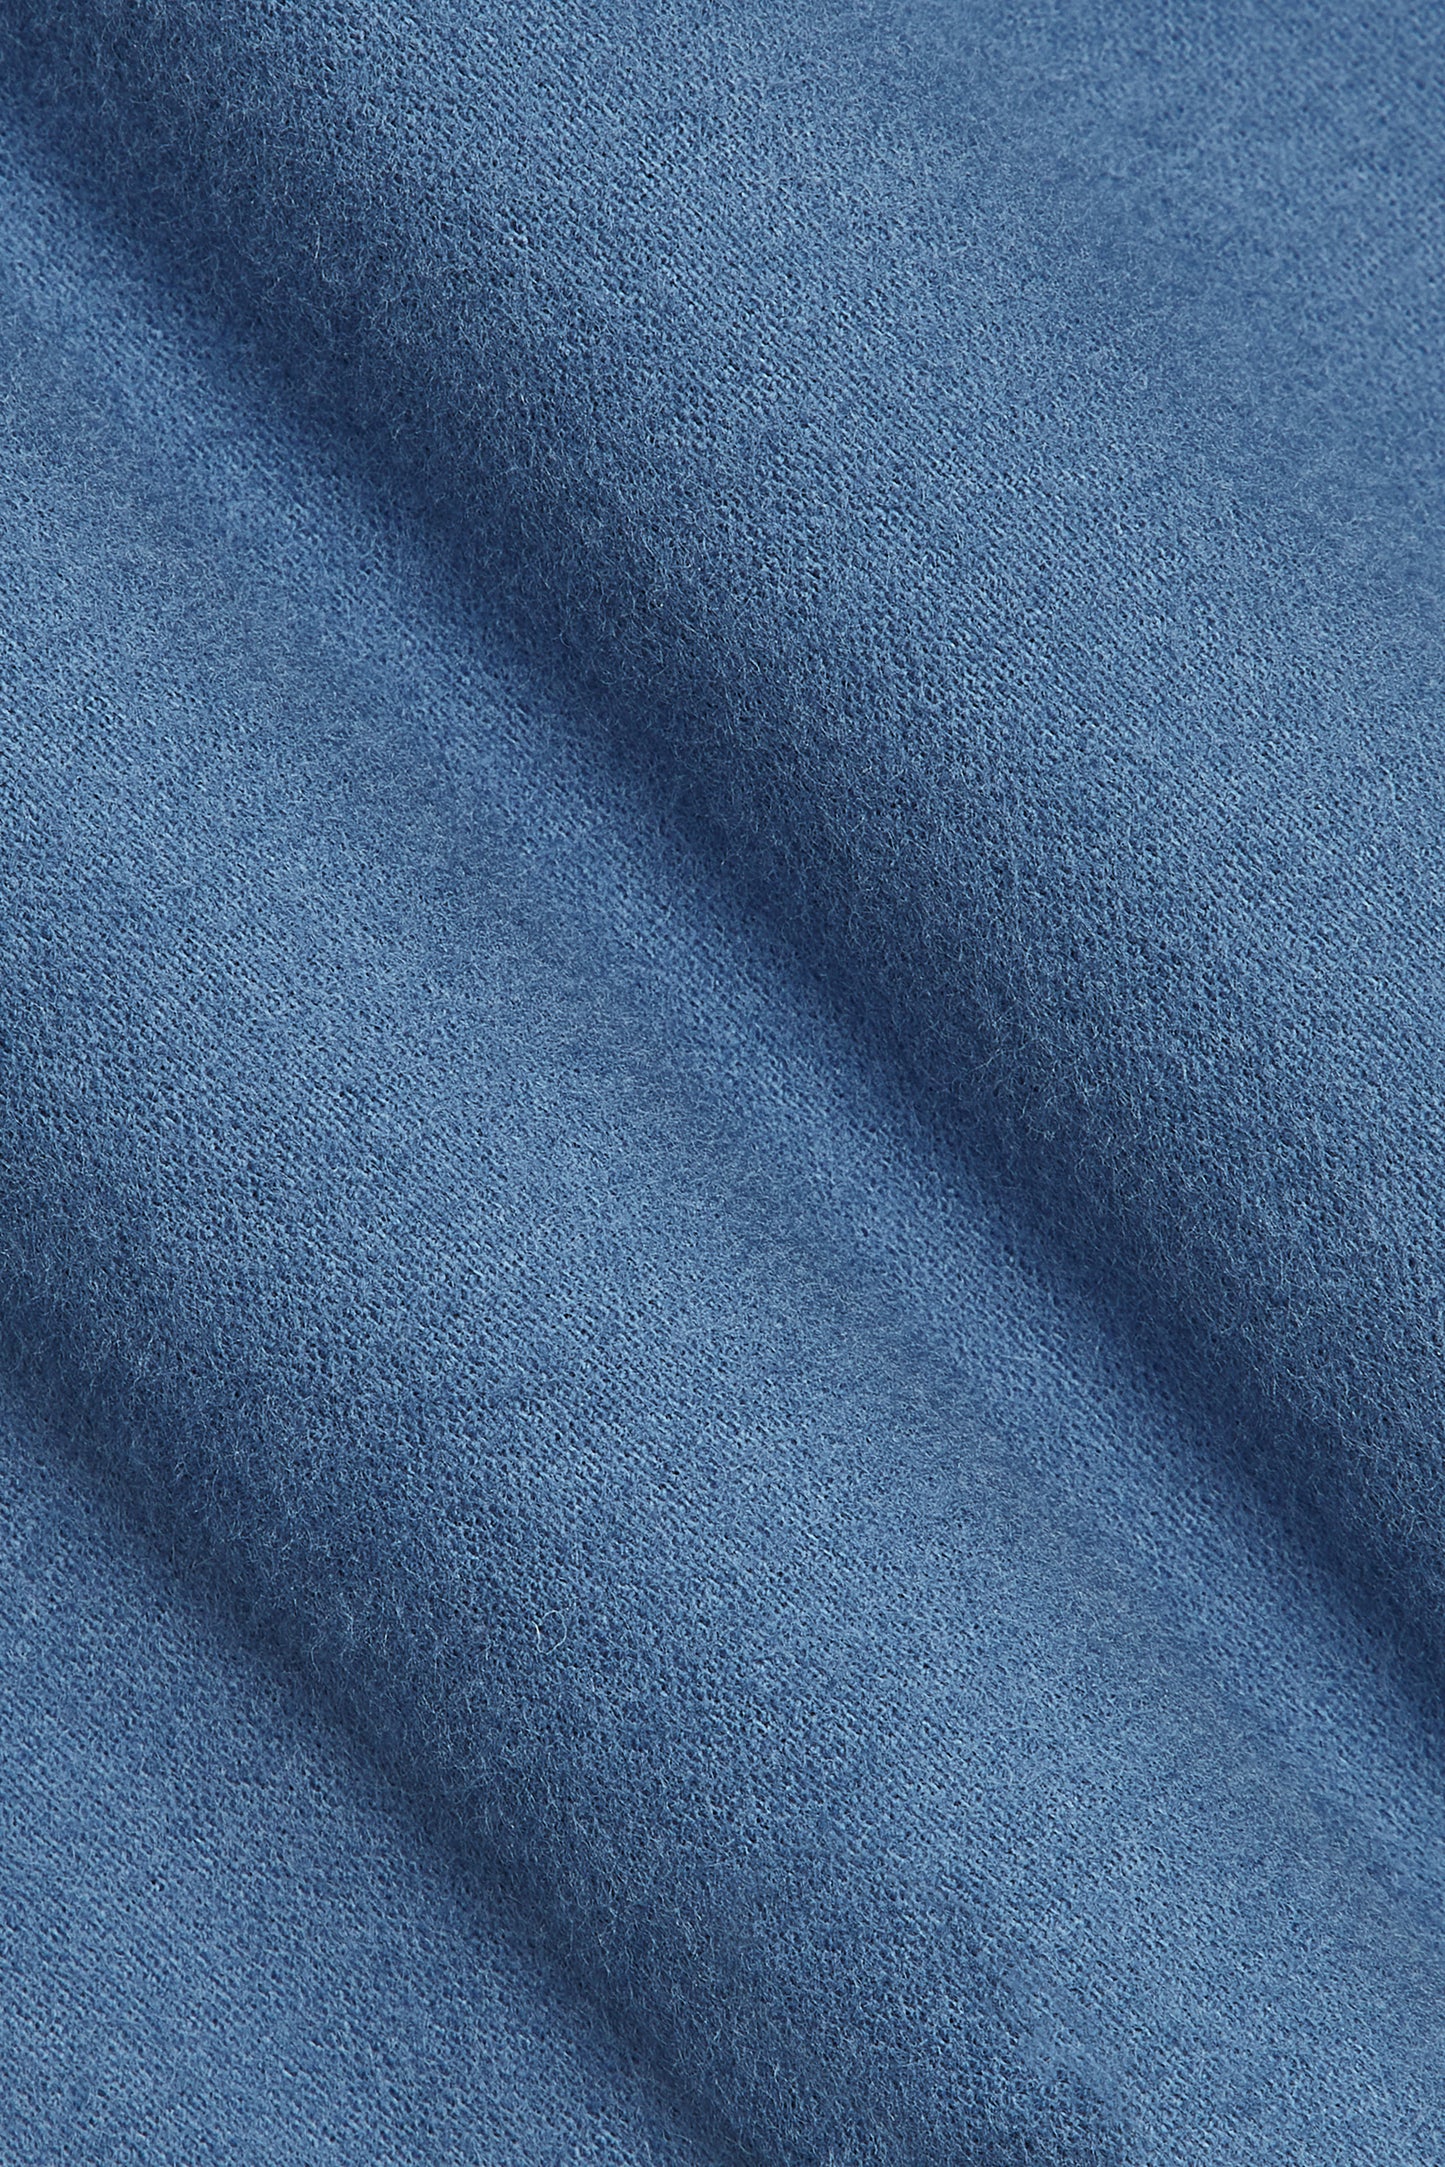 Denim Blue Japanese Flannel Shirt